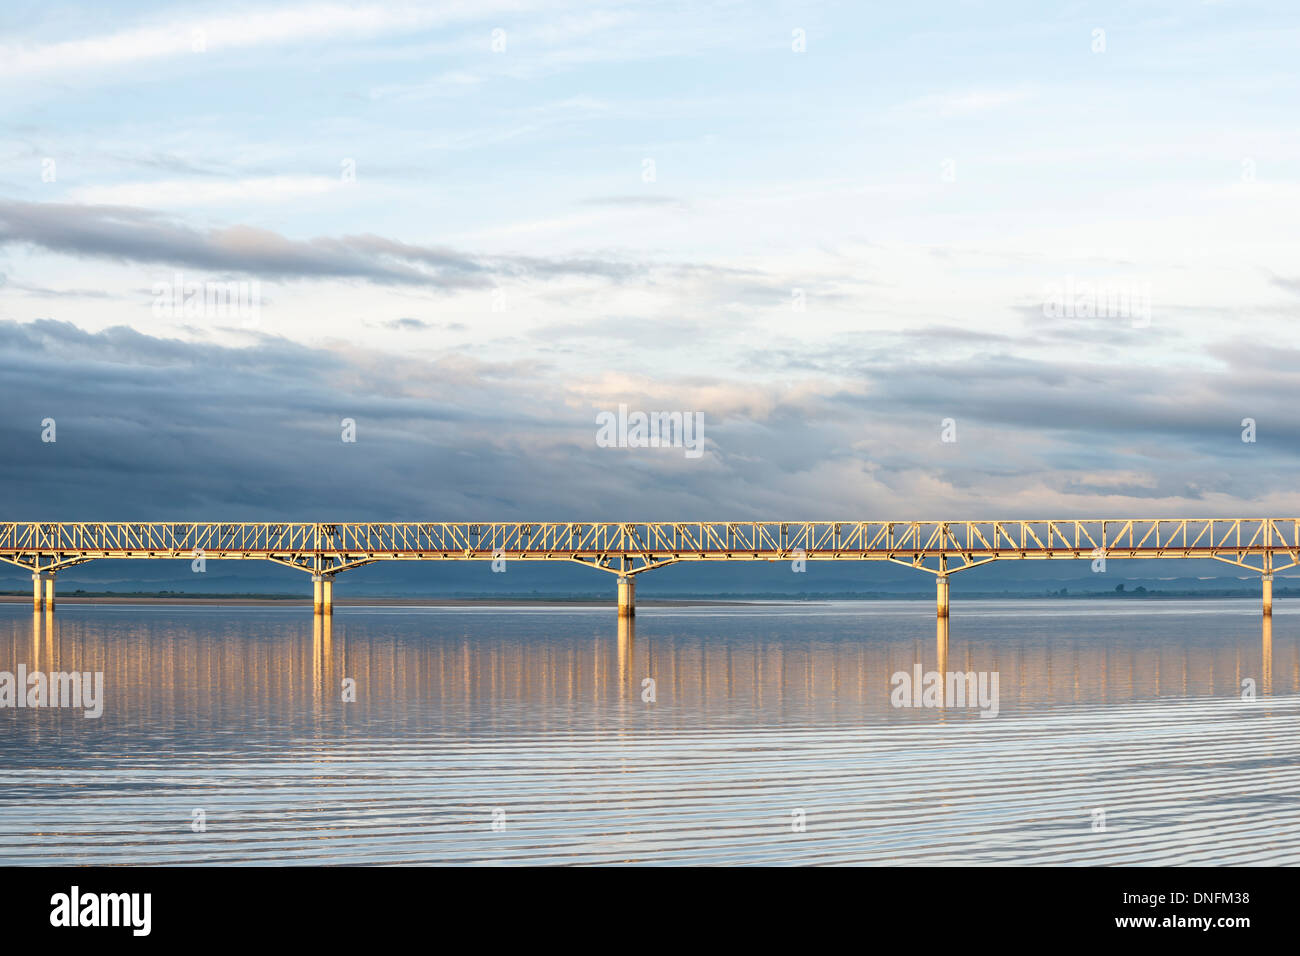 Pakokku Bridge across the Irrawaddy River in Myanmar. Myanmar travel and people images. Stock Photo